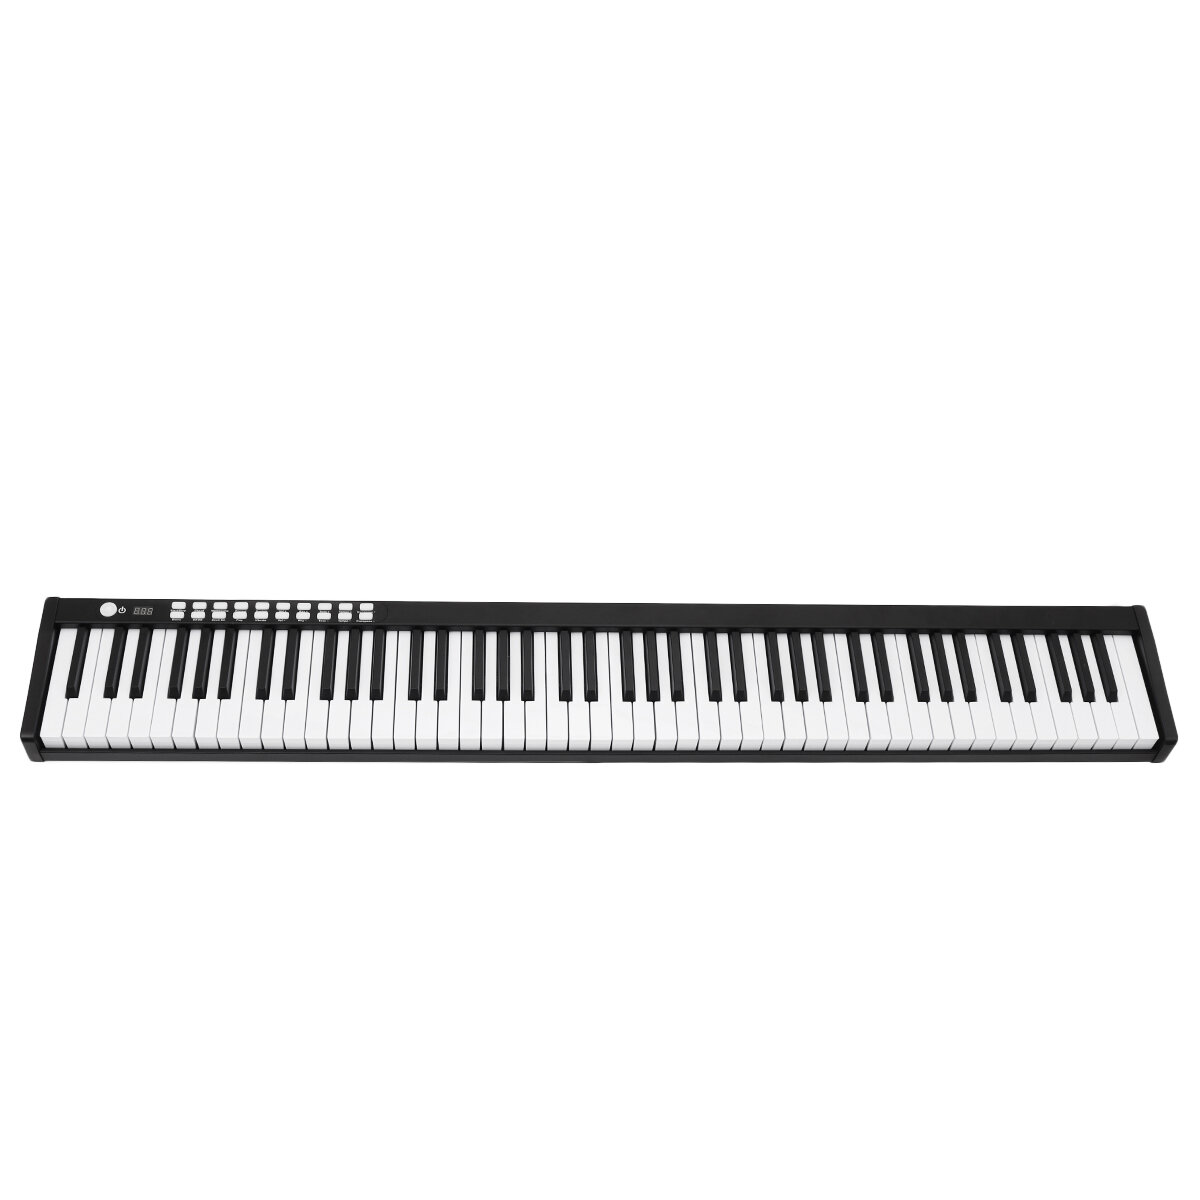 Image of BORA BX-1A 88 Keys Portable Standard Digital KeyboardLED Keys Smart Electronic Piano